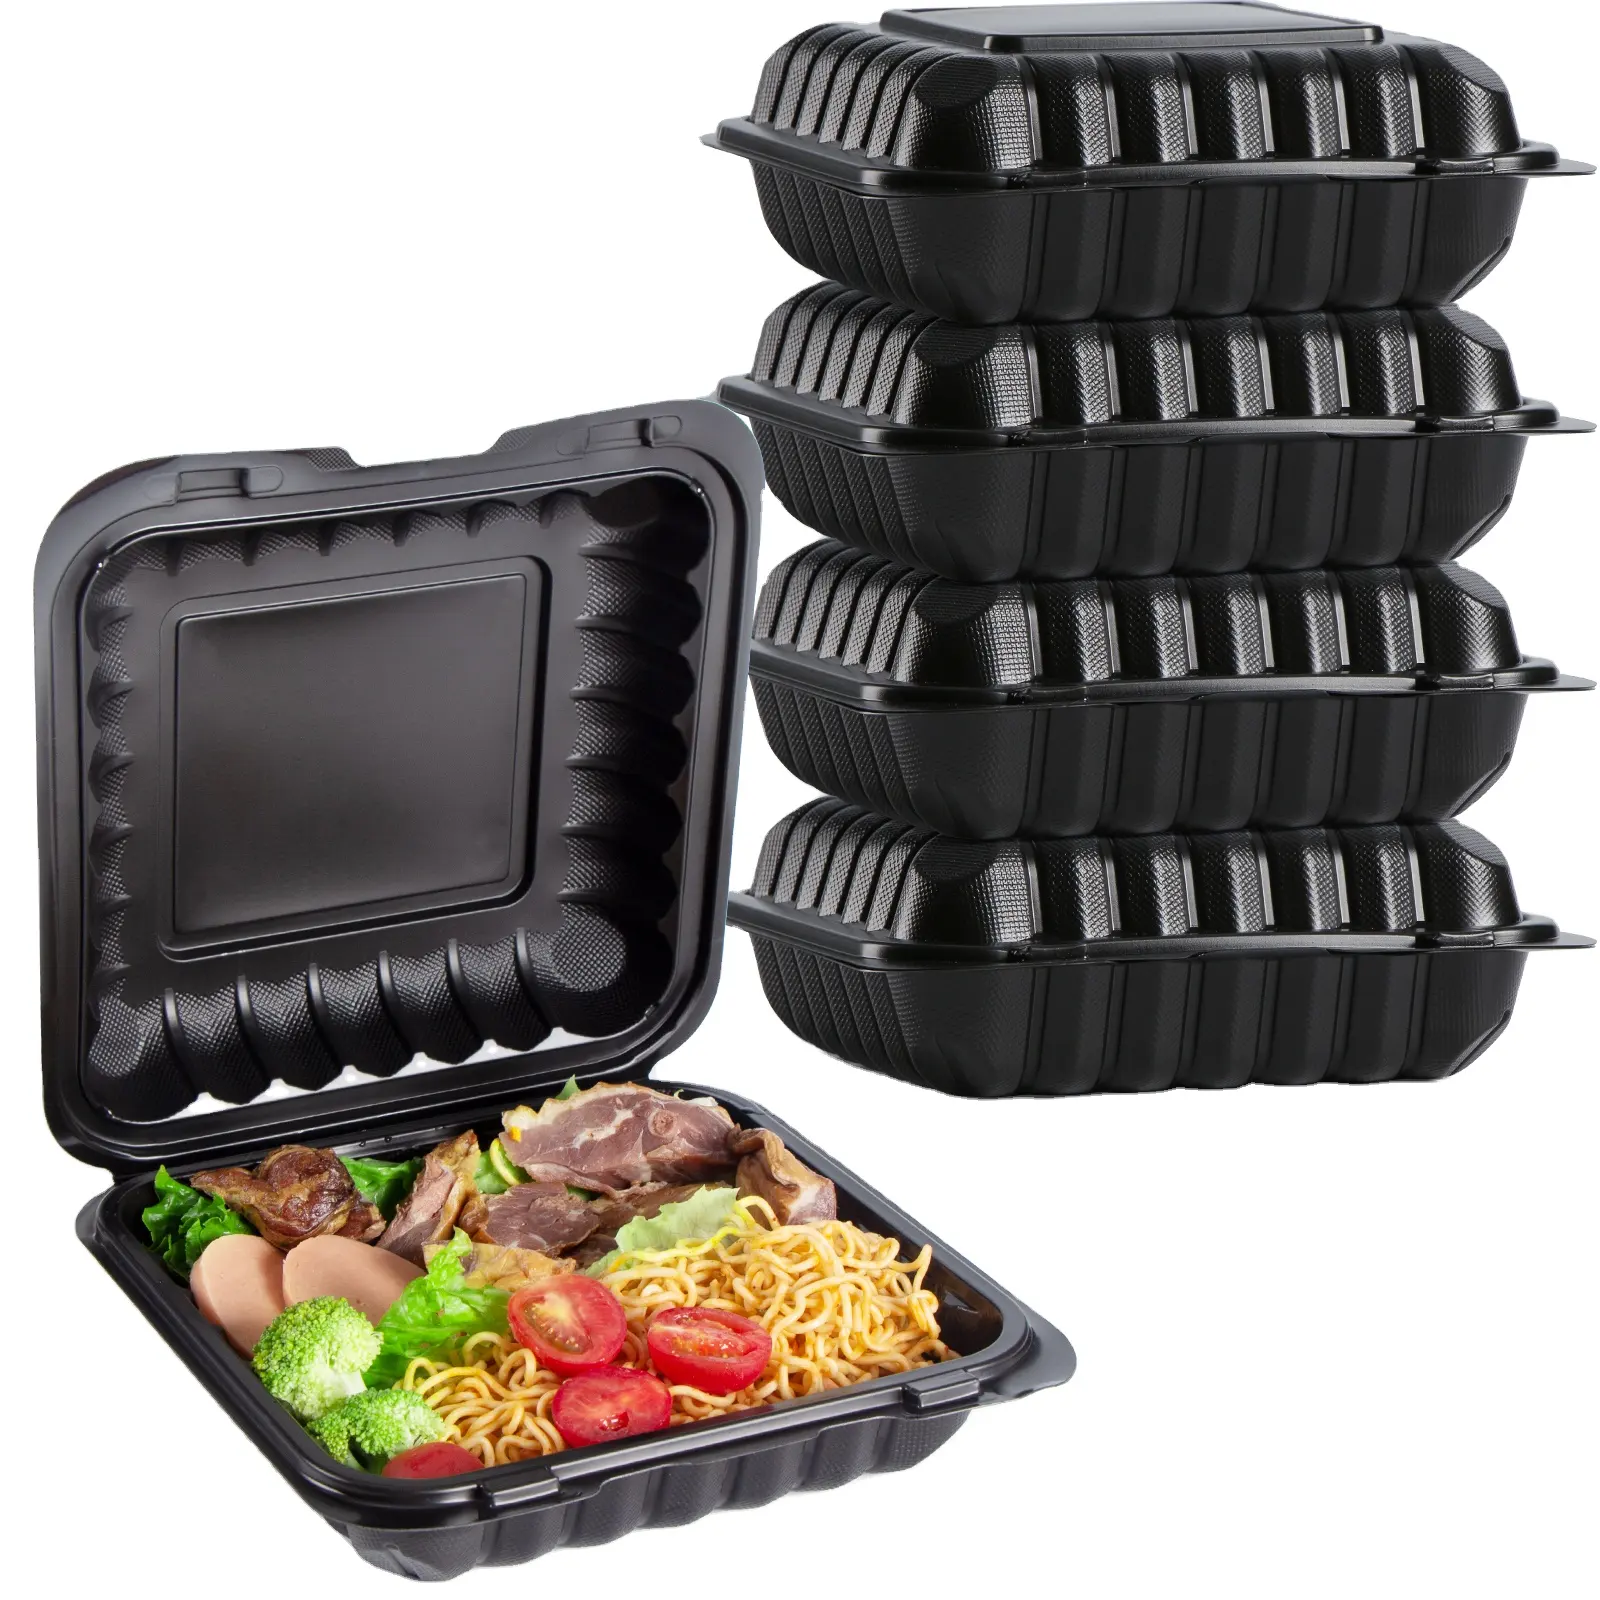 Clamshell descartável mfpp preto dobradiça tirar caixa de comida 3 compartimentos togo recipientes de comida para hambúrguer restaurante